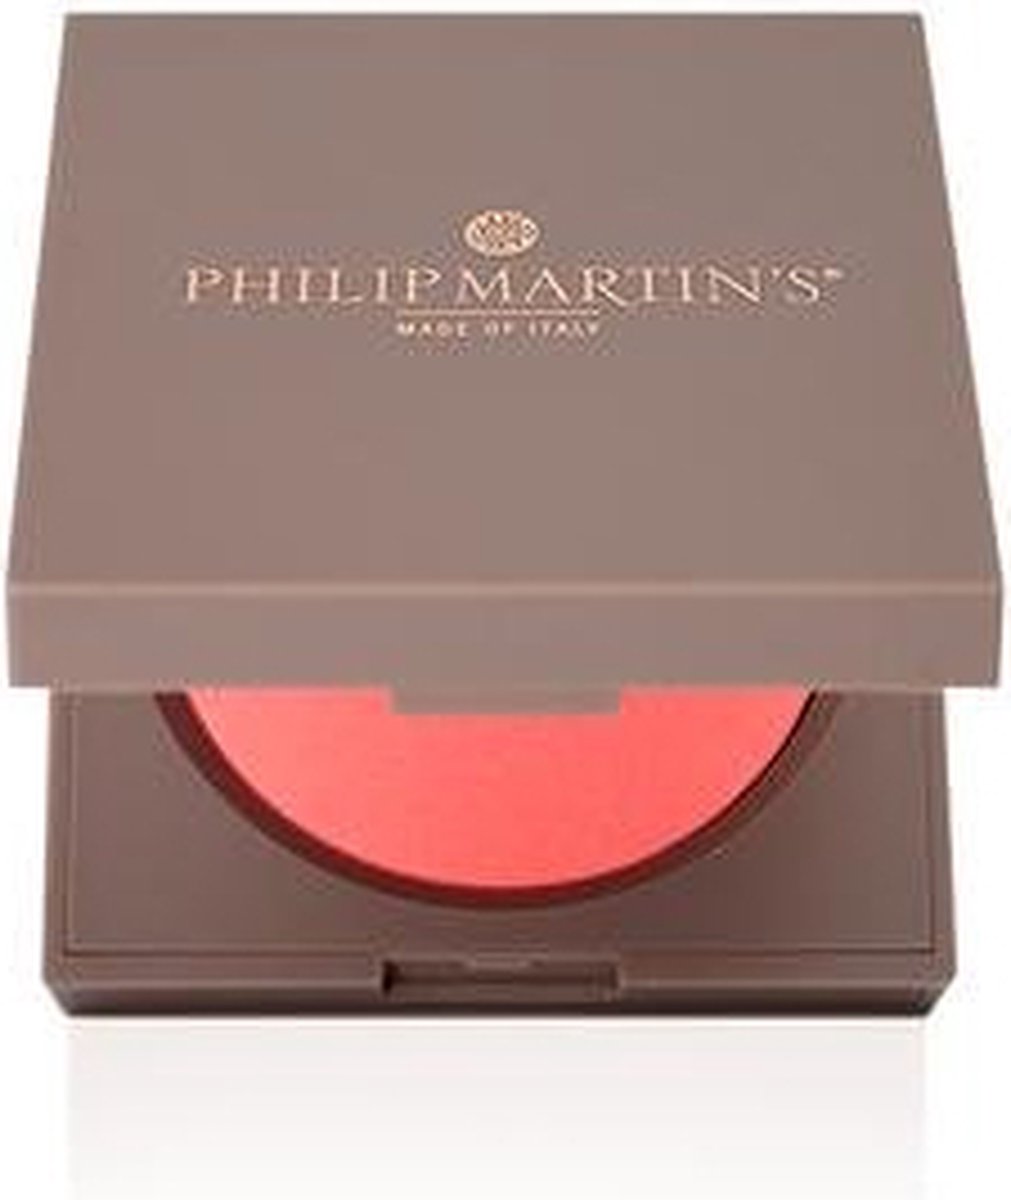 Philip Martin's - Make-up - Blush 702 Peach